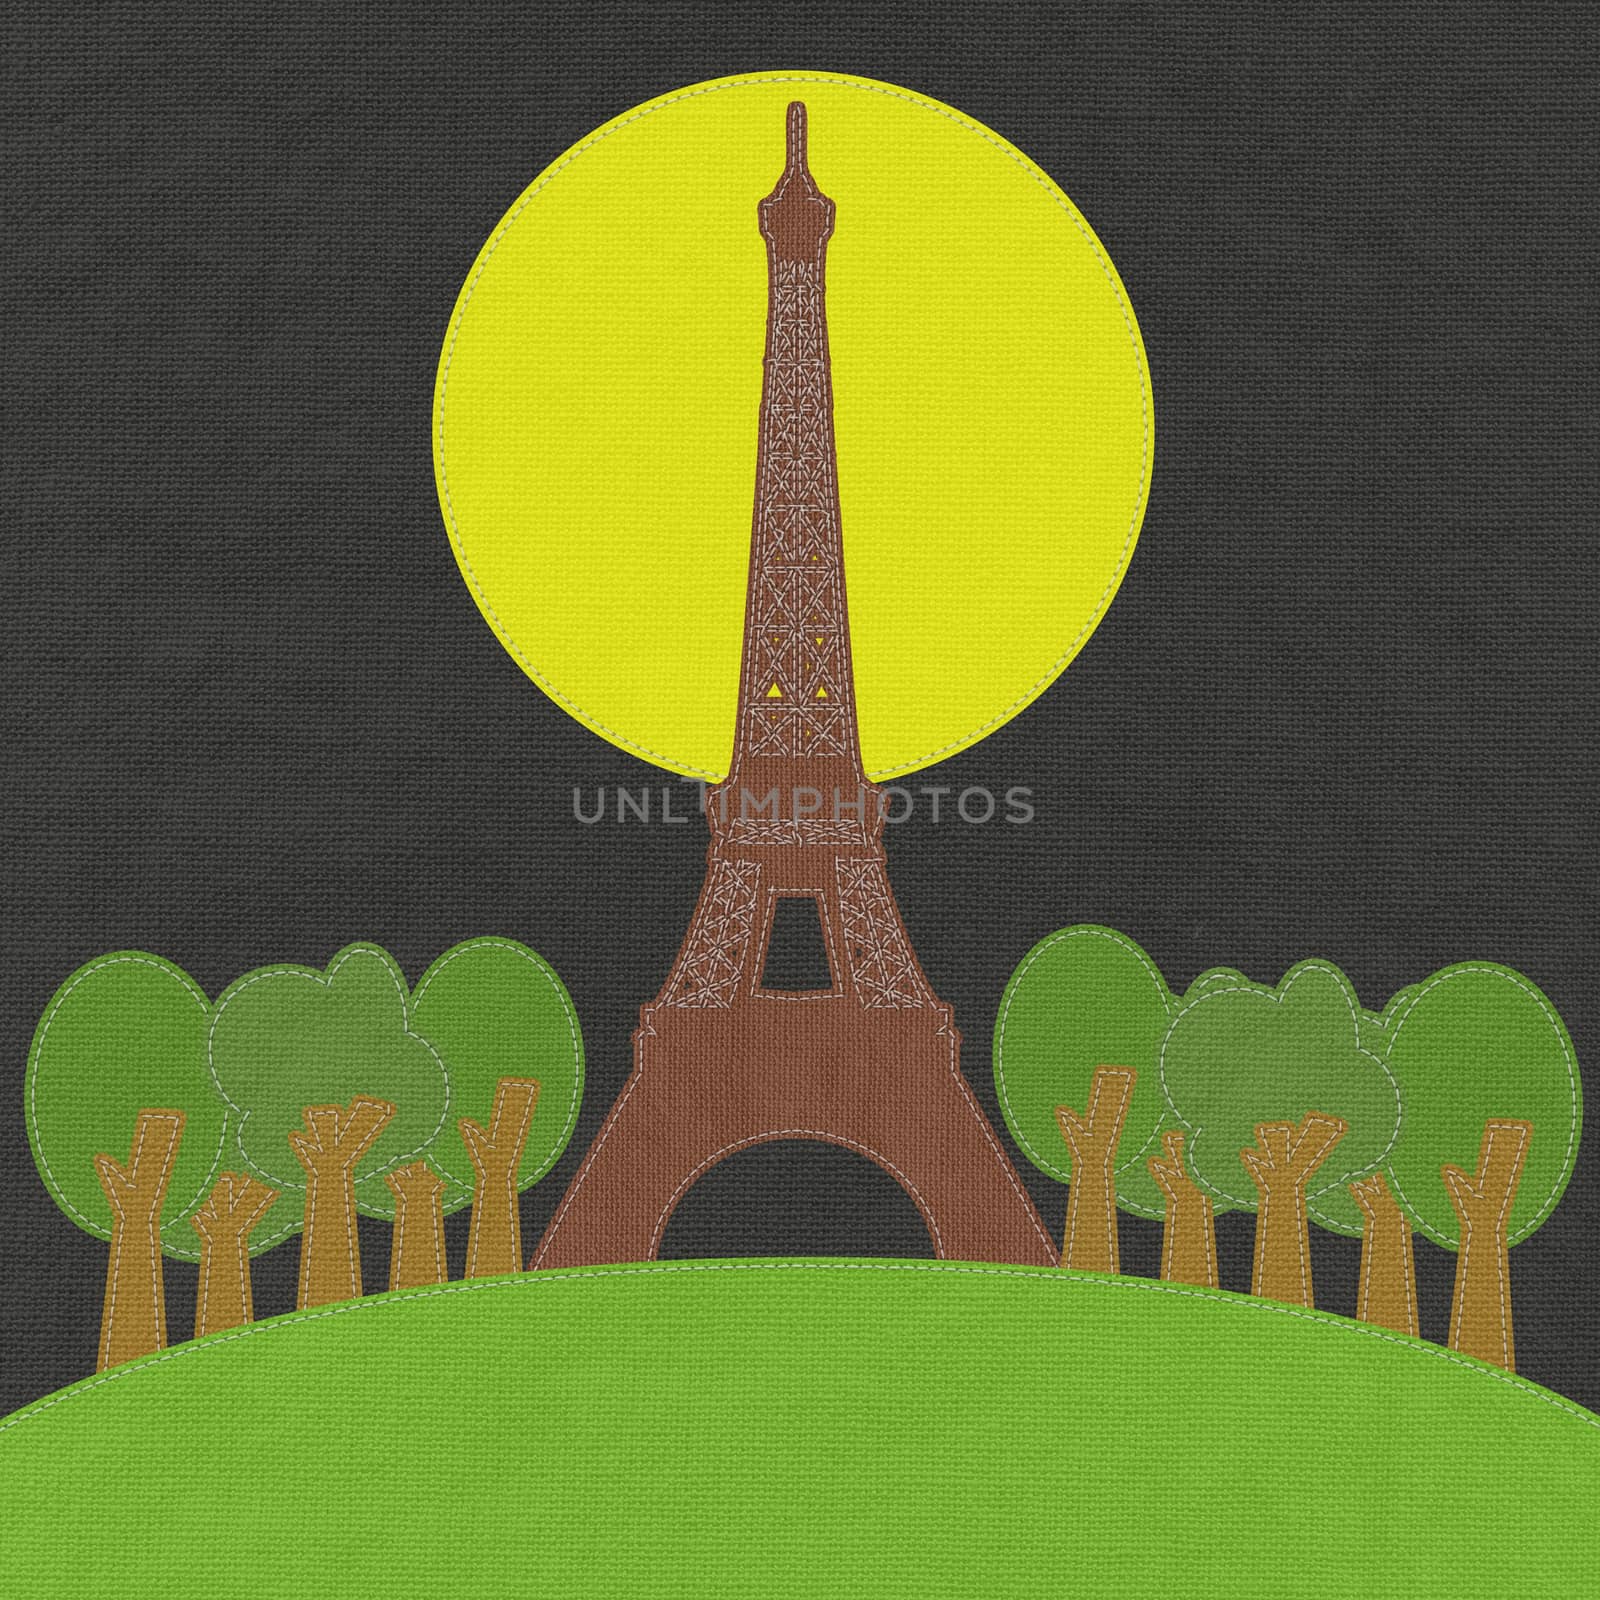 Eiffel tower, Paris. France in stitch style on fabric background by basketman23